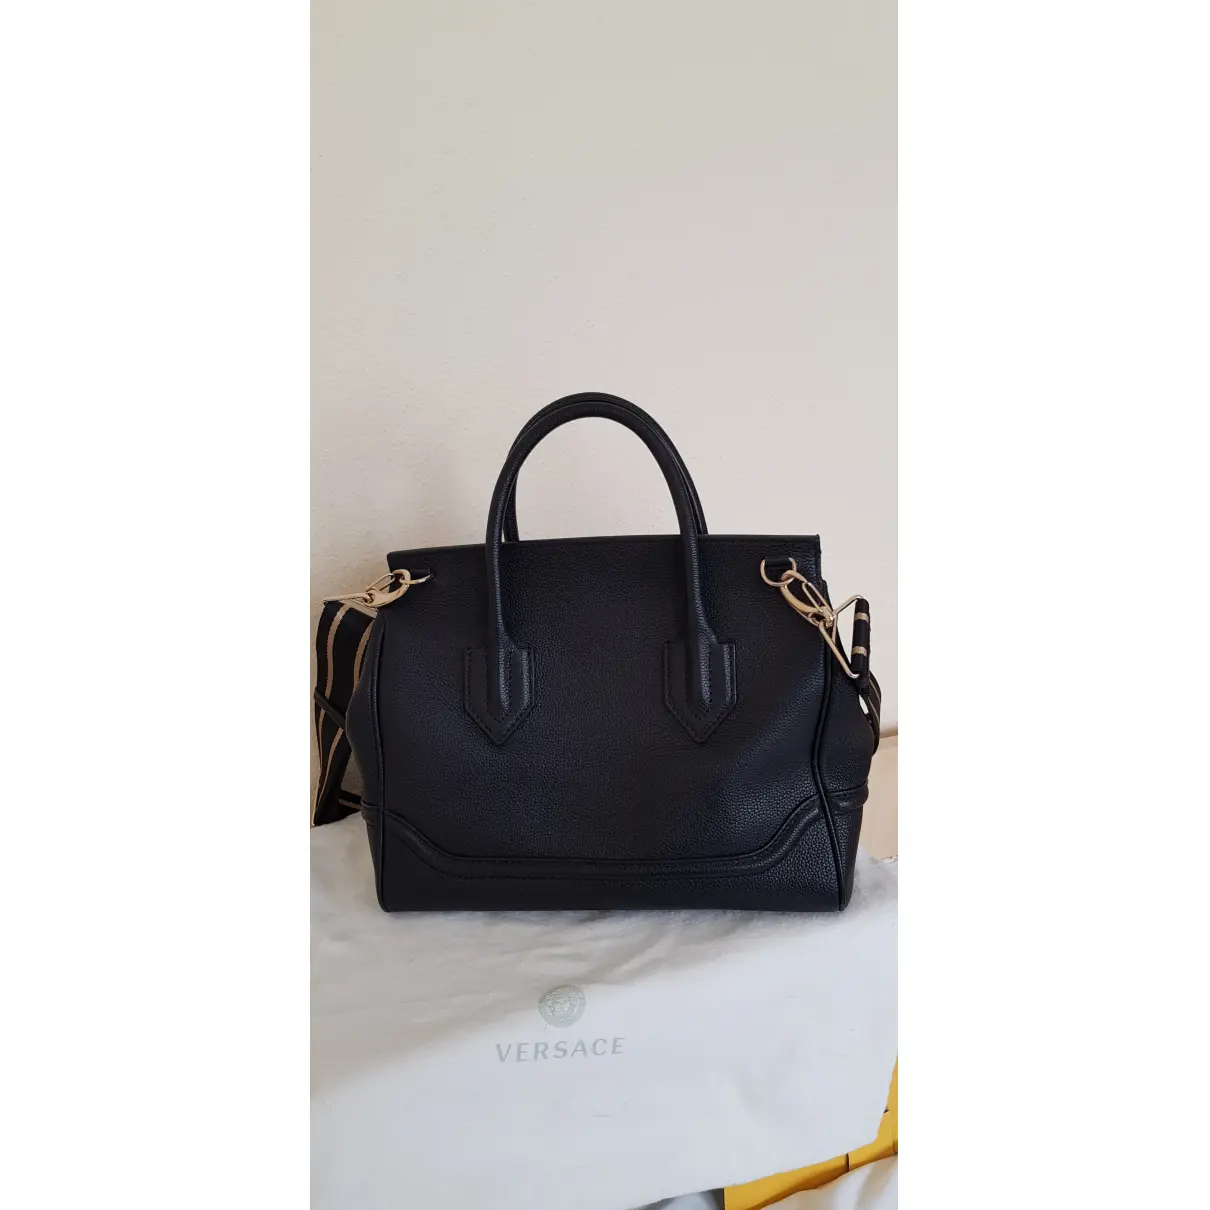 Buy Versace Palazzo Empire leather handbag online